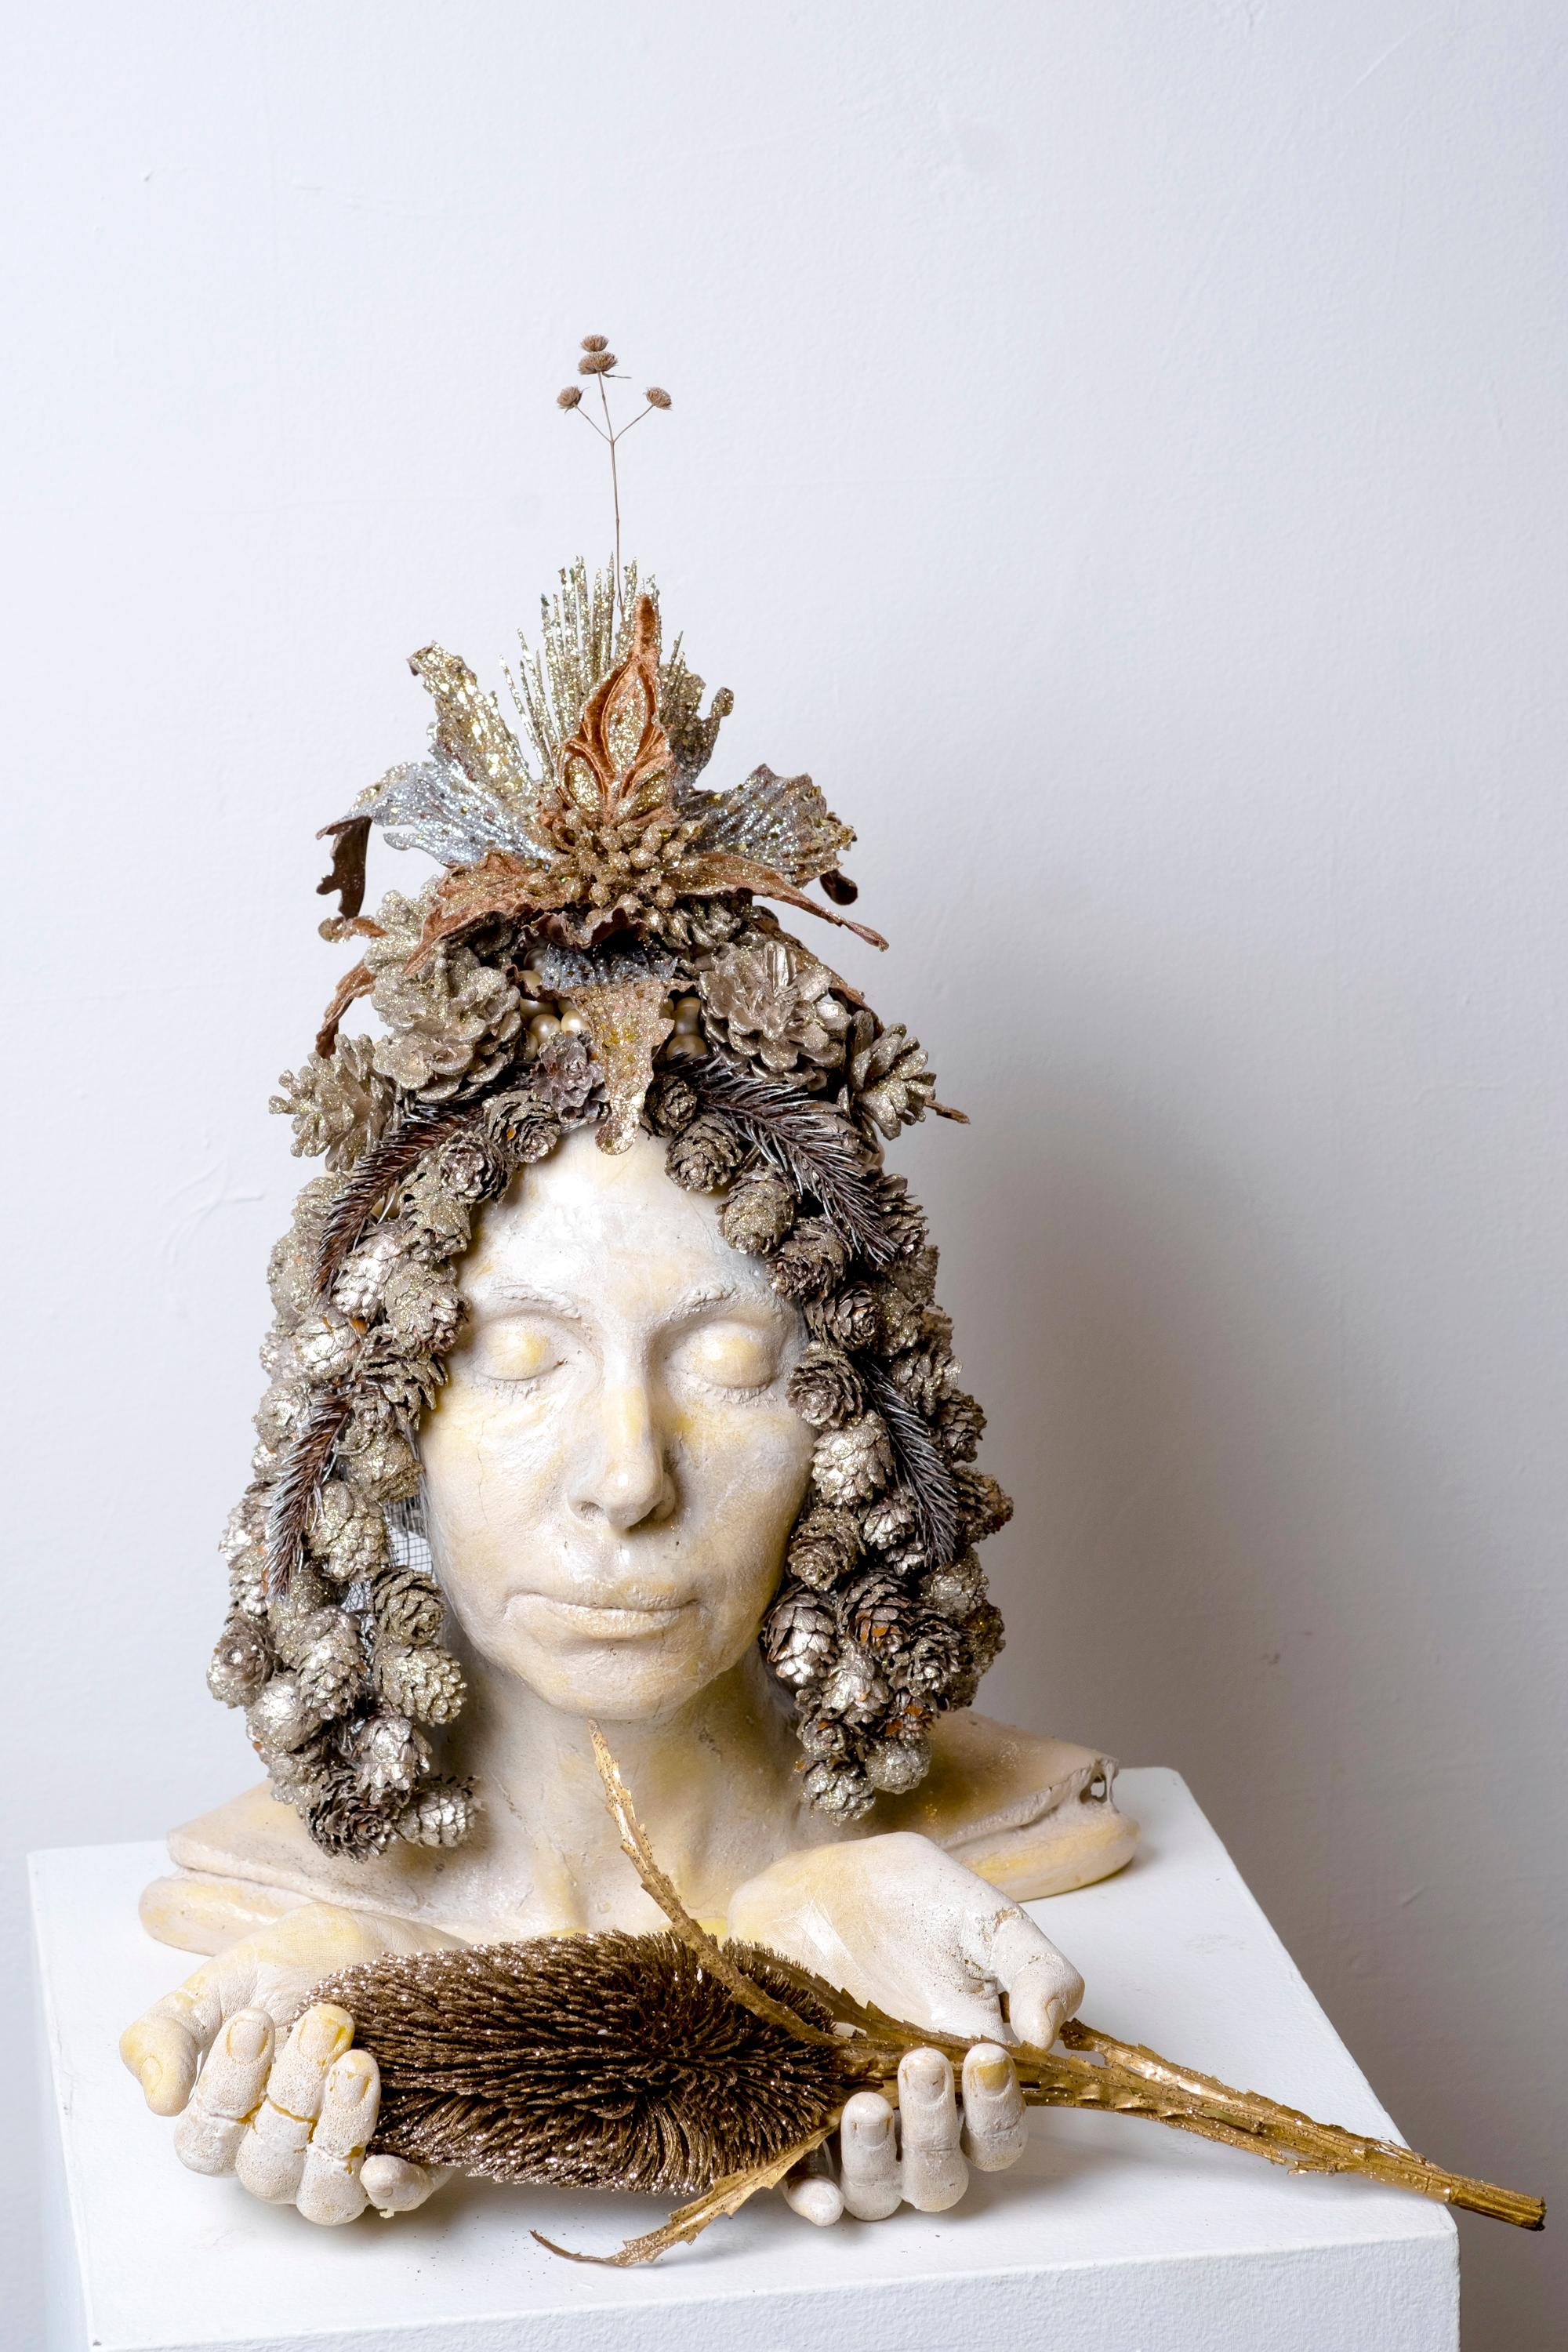 Kymia Nawabi Figurative Sculpture - THIRD EYE- sculpture with pinecones and headdress